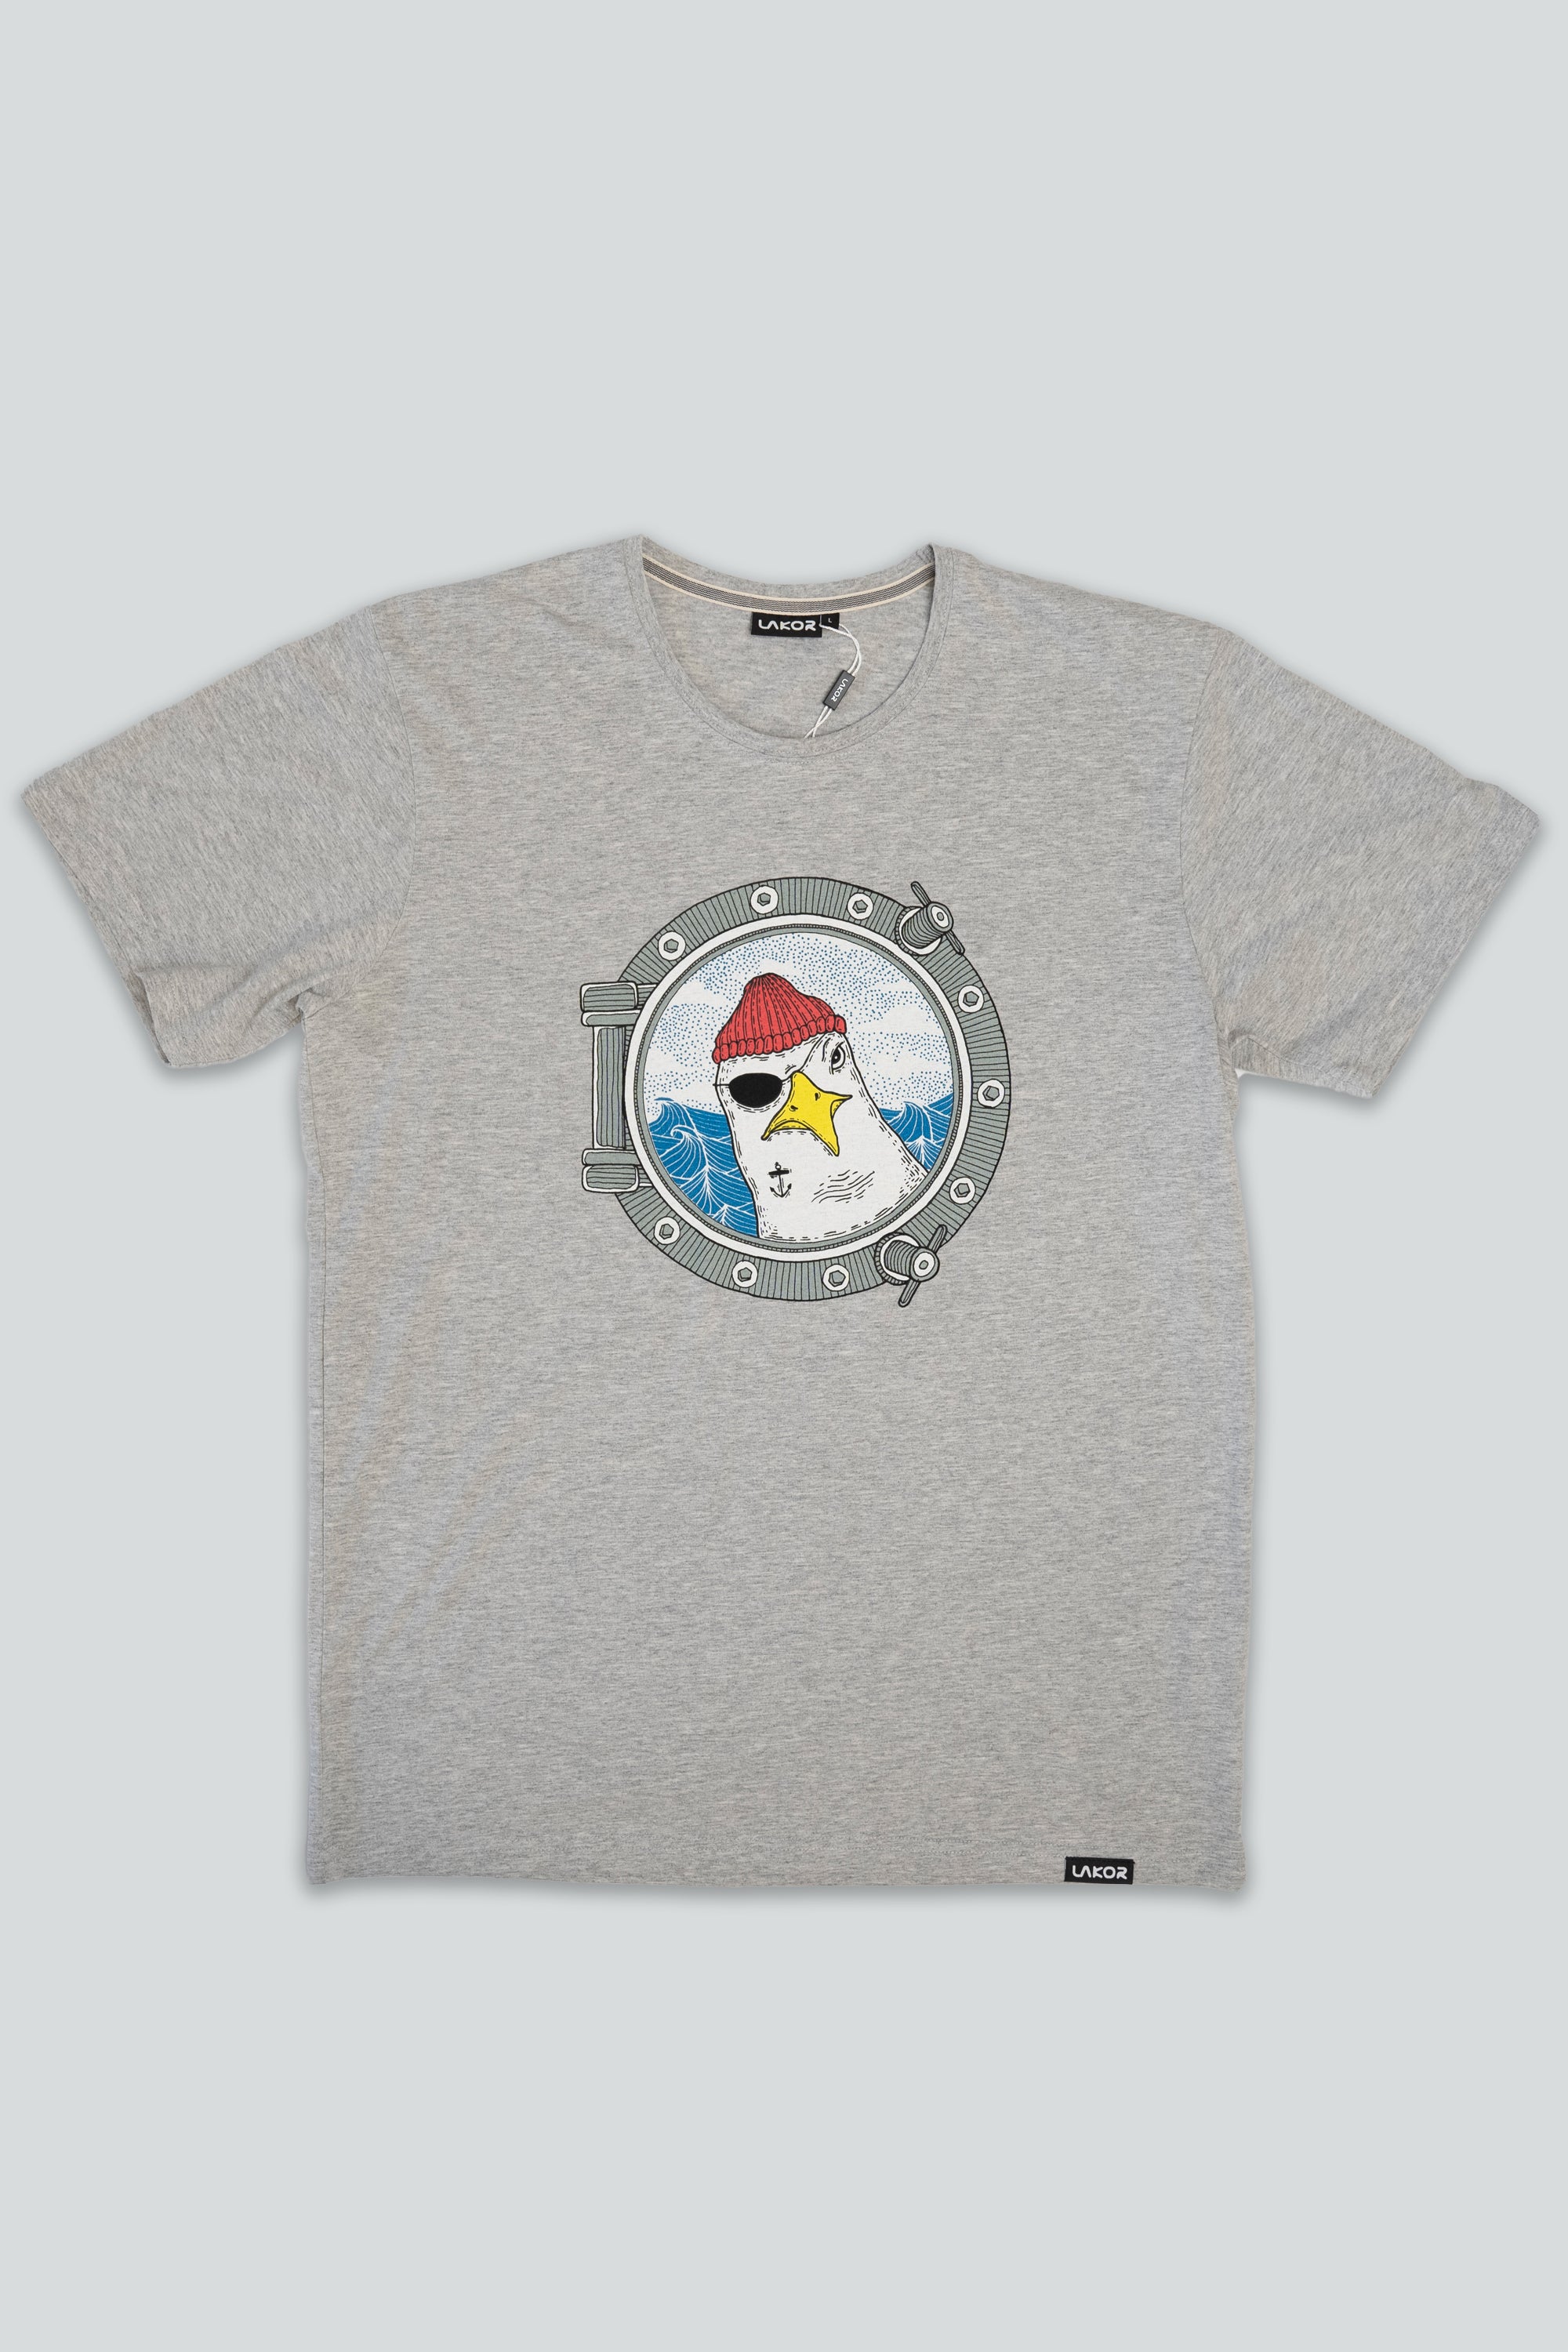 Lakor Soulwear Porthole T-Shirt